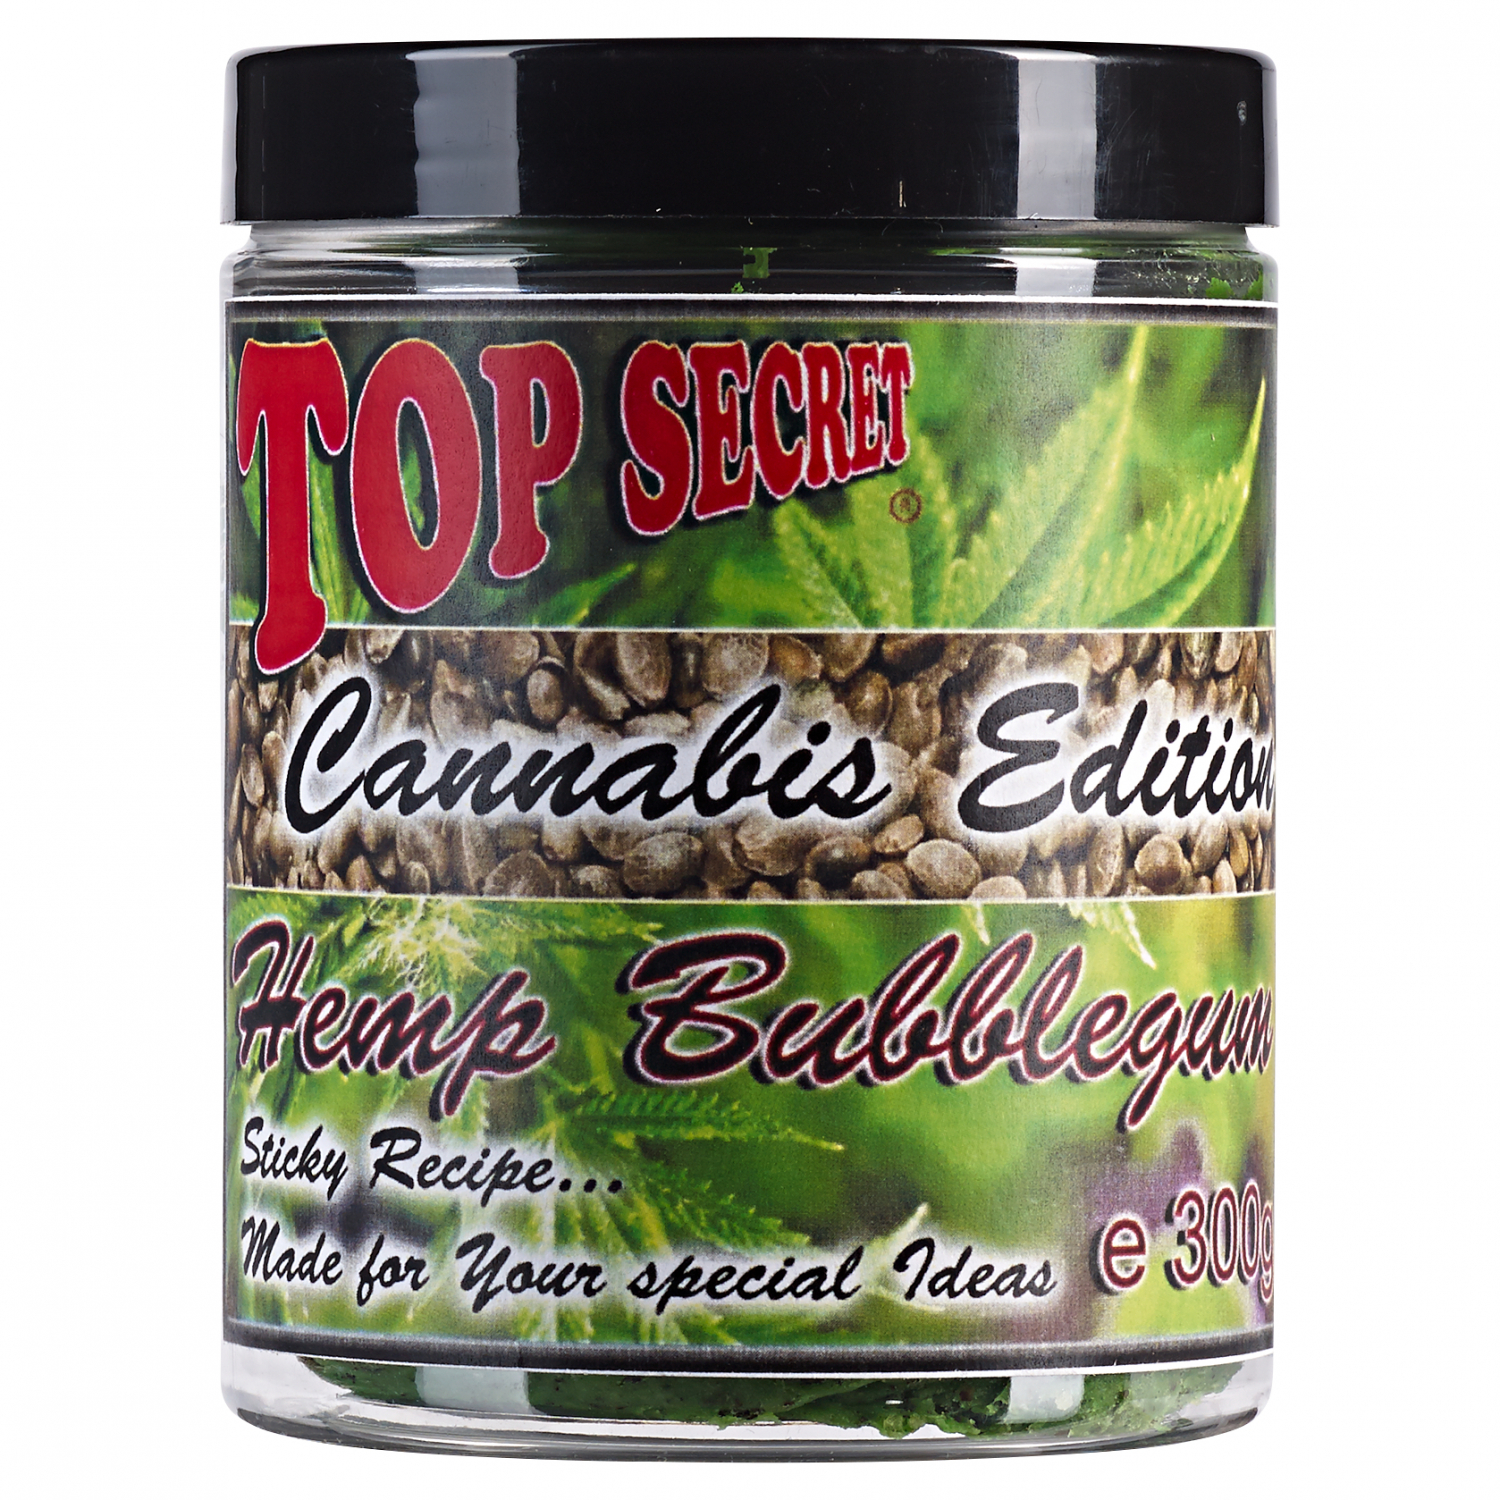 Top Secret Top Secret Cannabis Edition Bubble Gum Teig - Tutti Frutti 